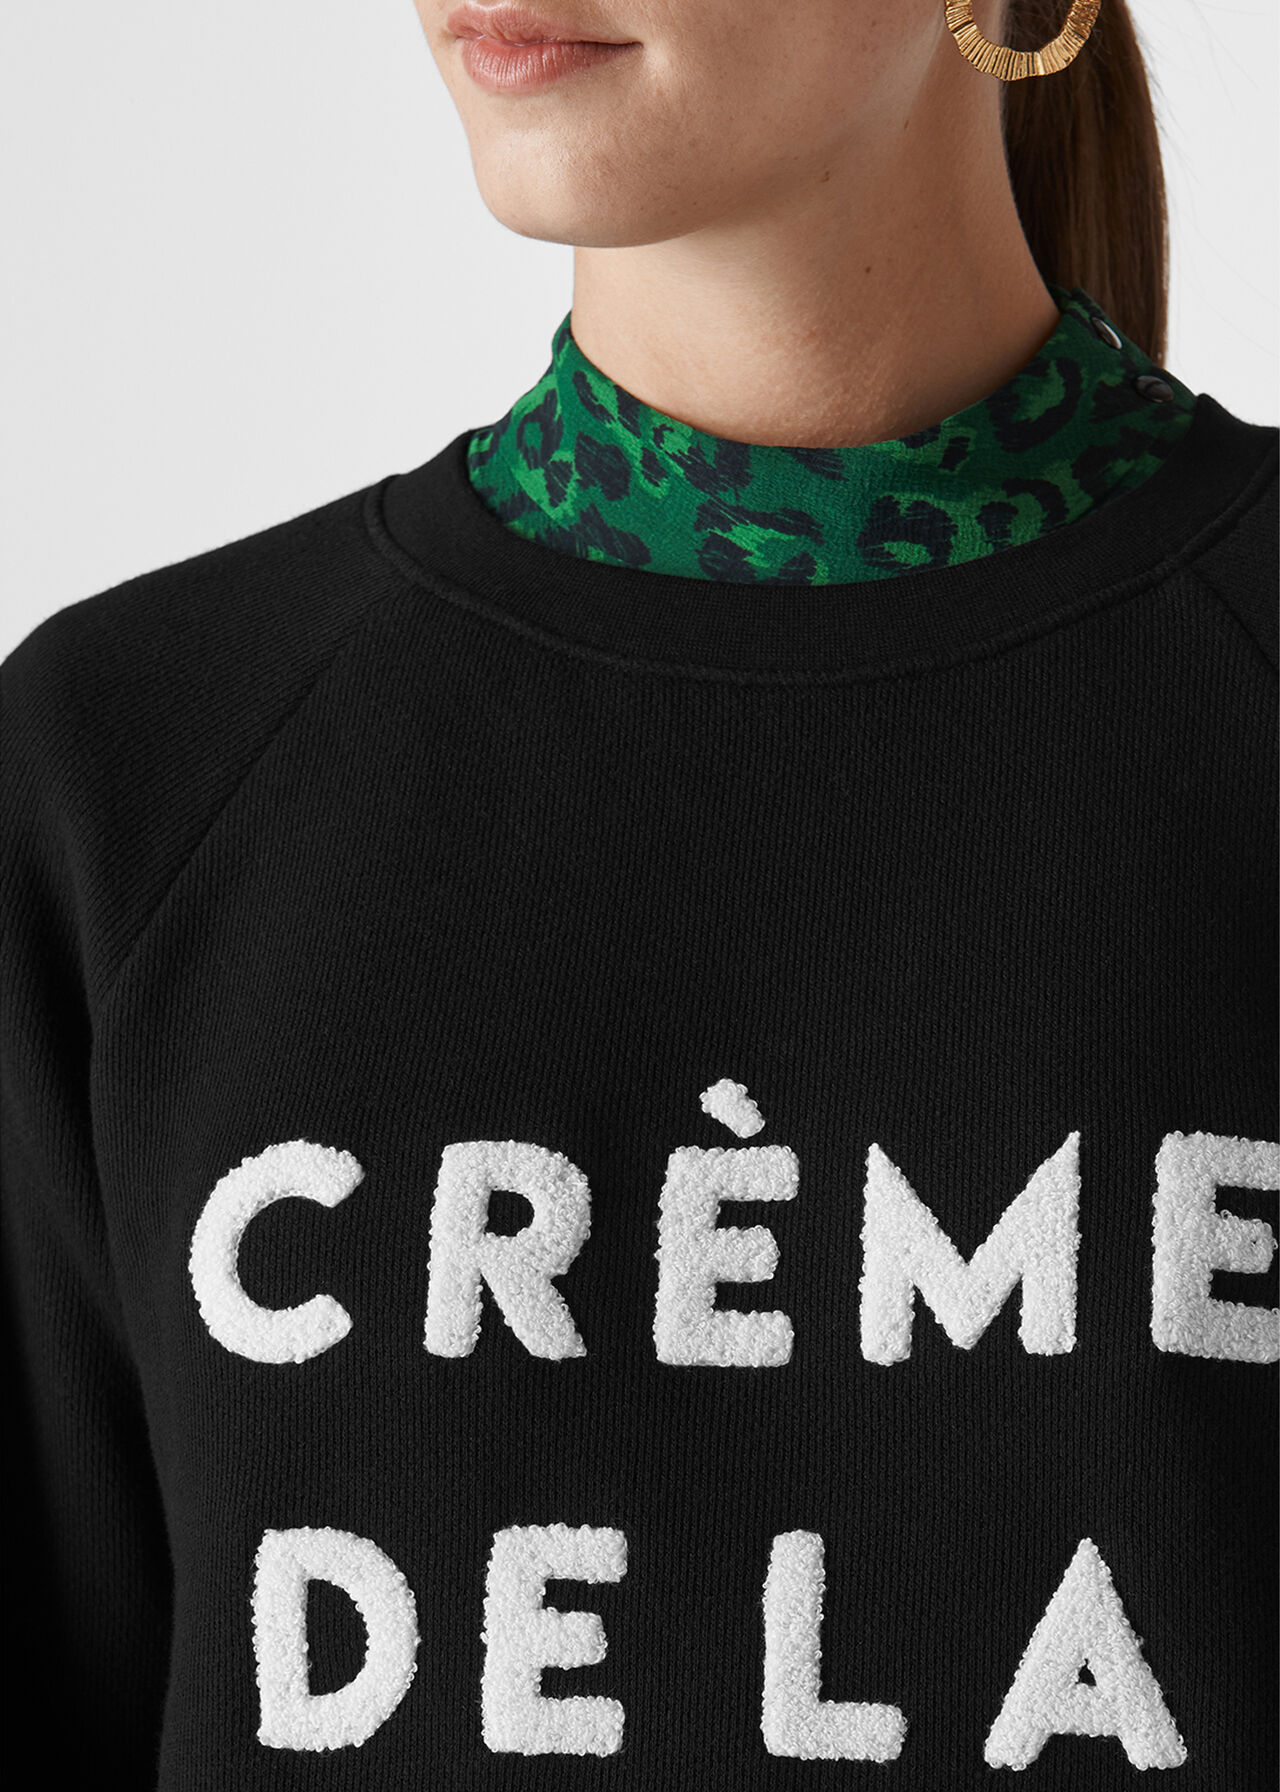 Creme De La Creme Sweatshirt